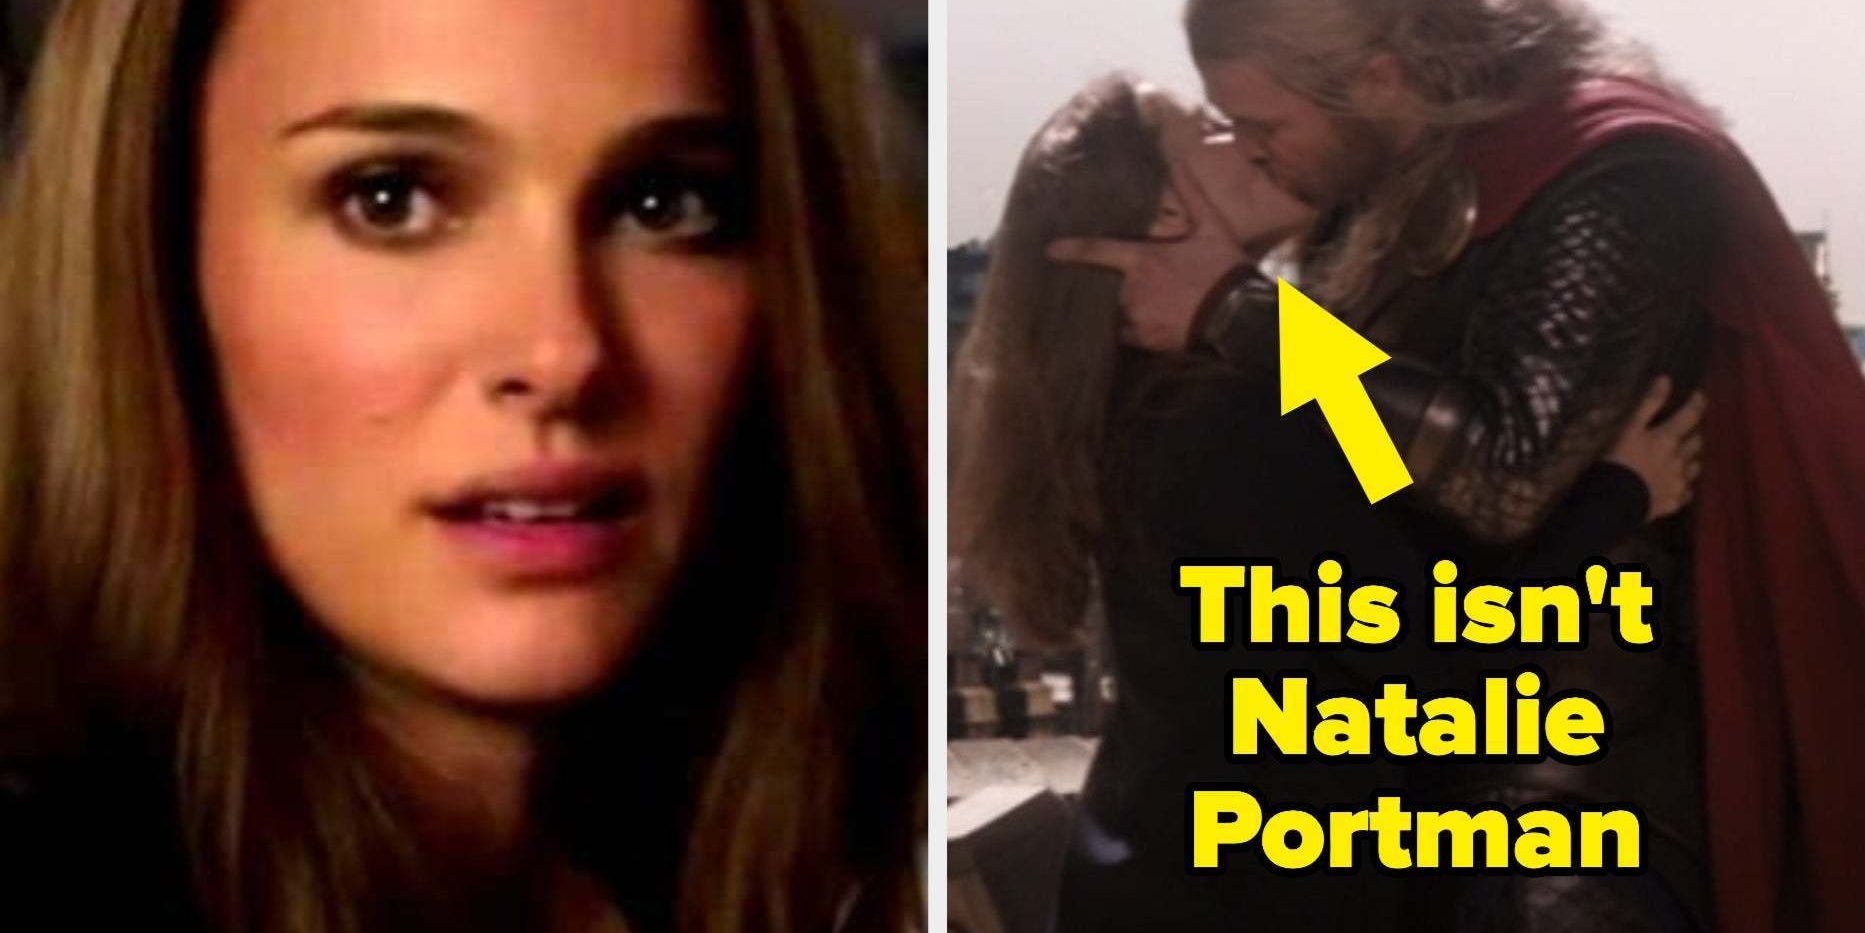 The Kiss In "Thor: The Dark World" Isn't Natalie Portman